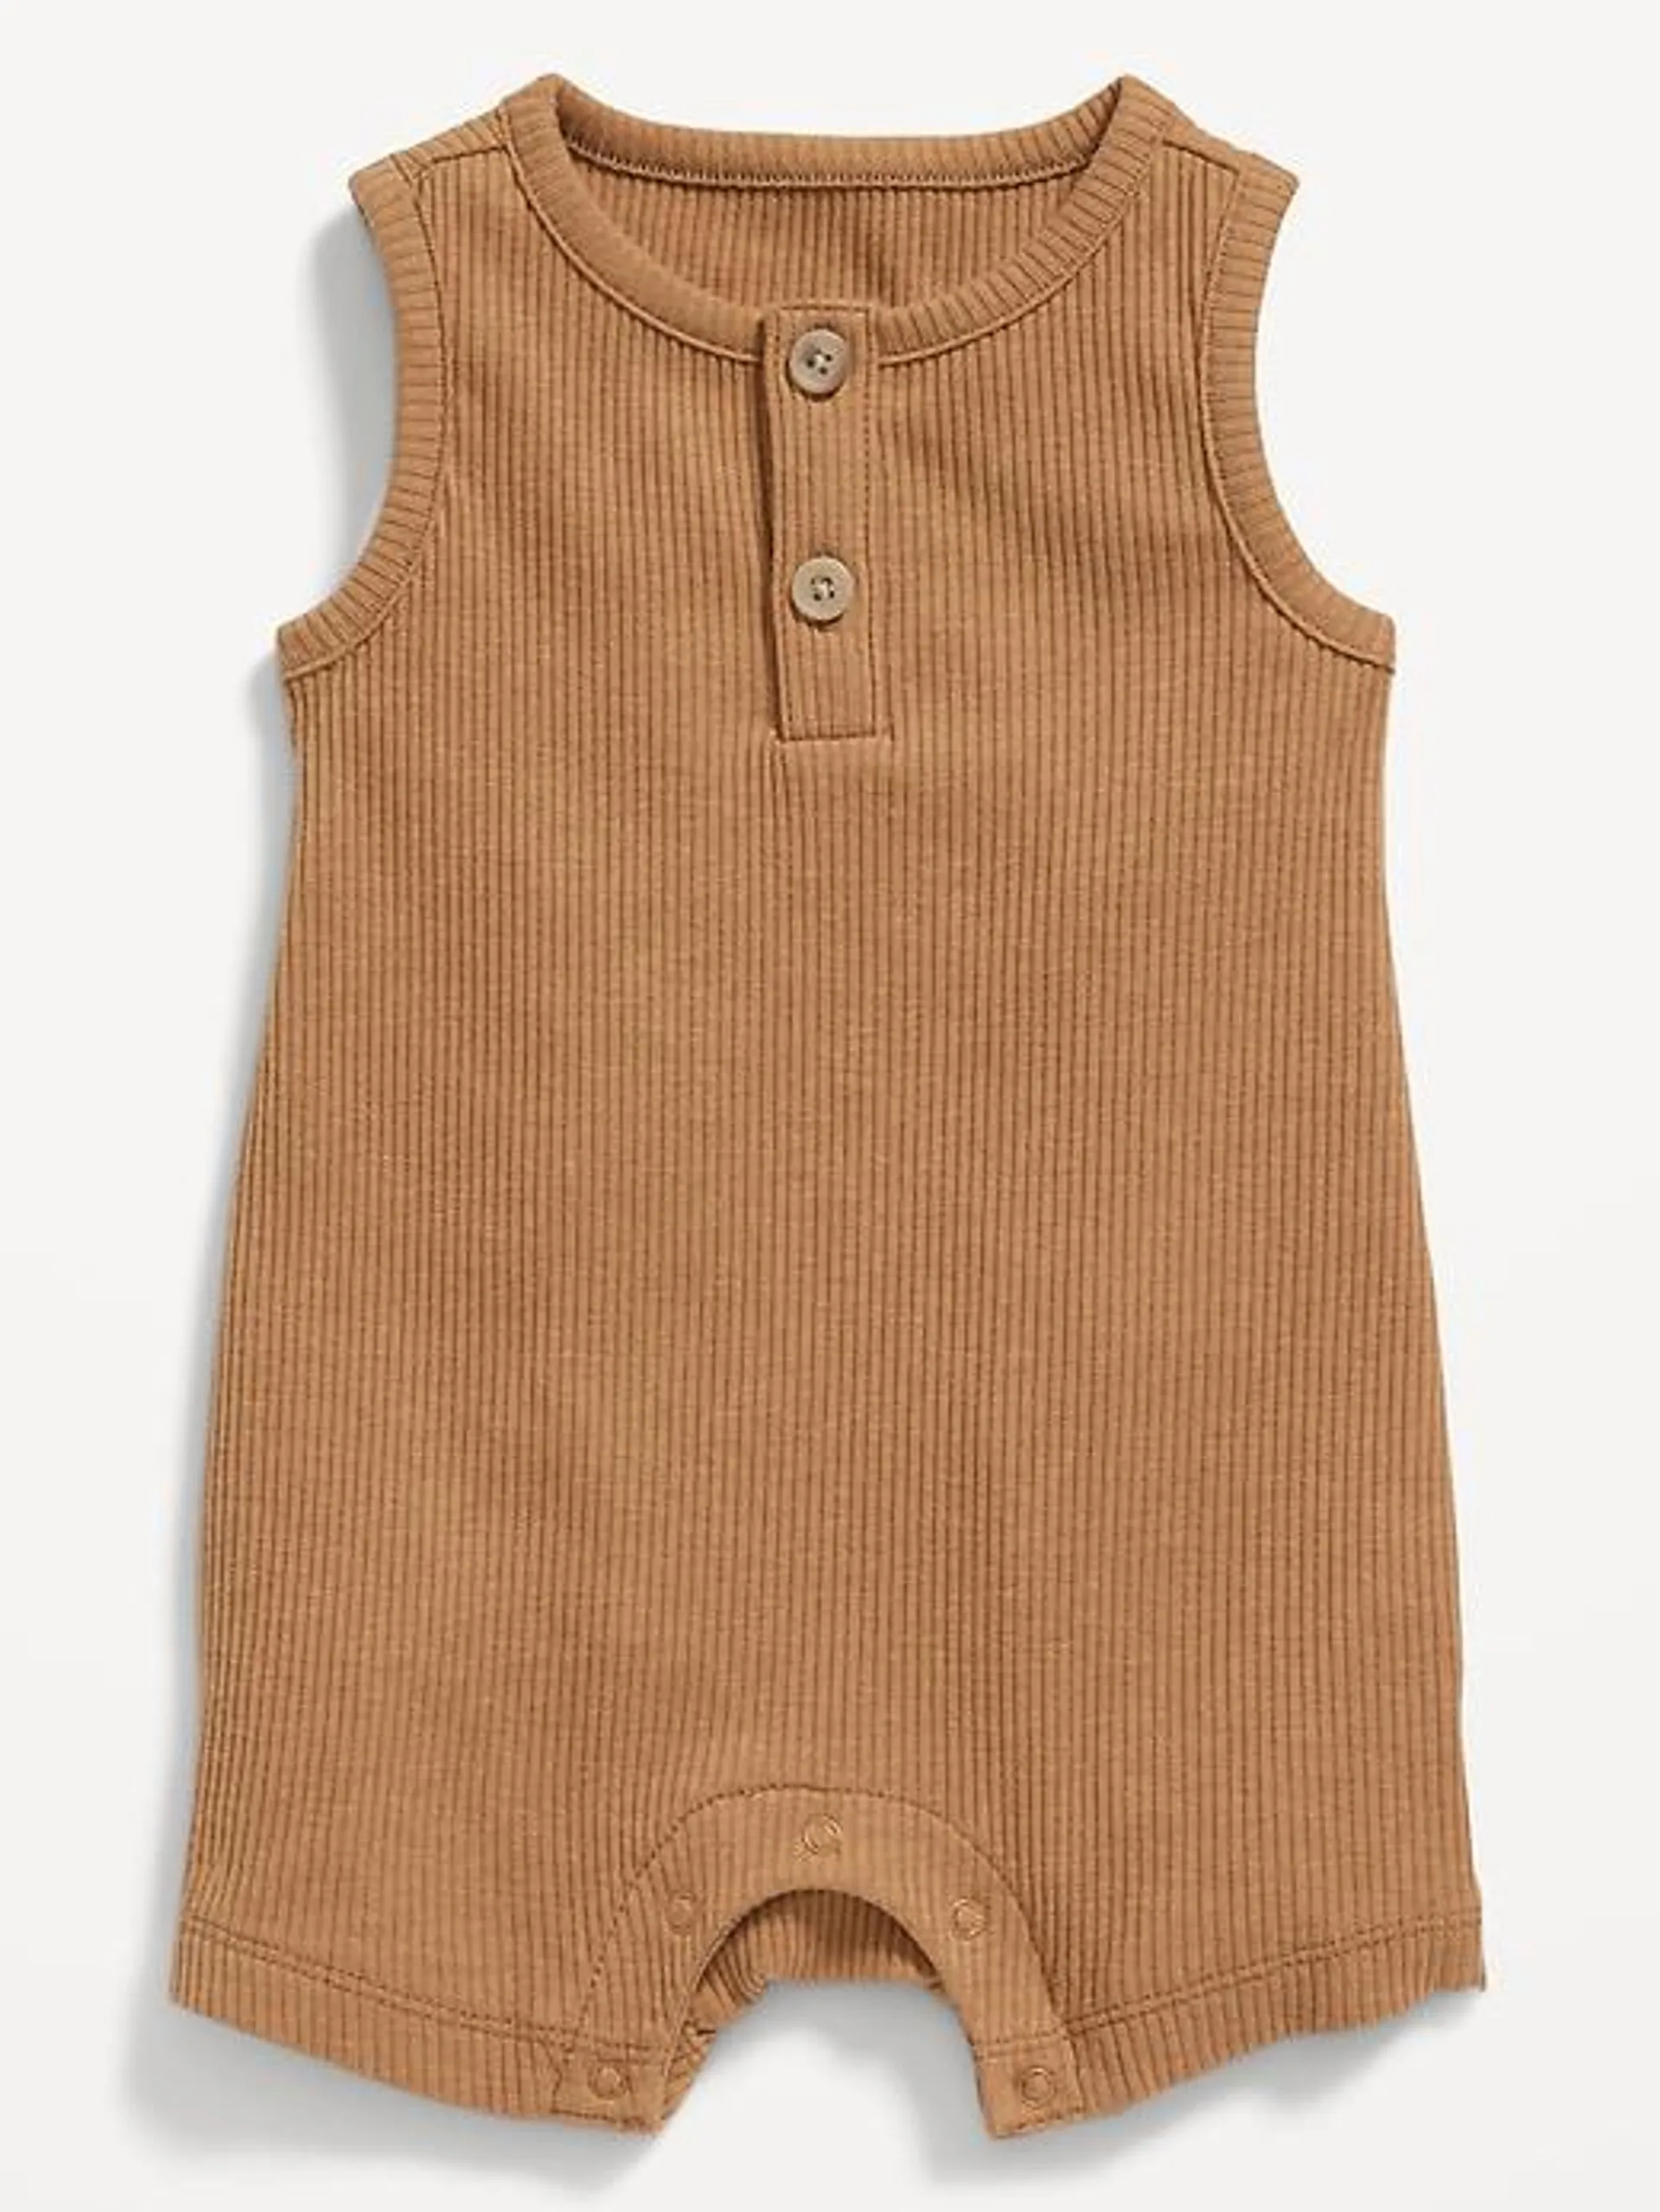 Unisex Sleeveless Rib-Knit Henley Romper for Baby